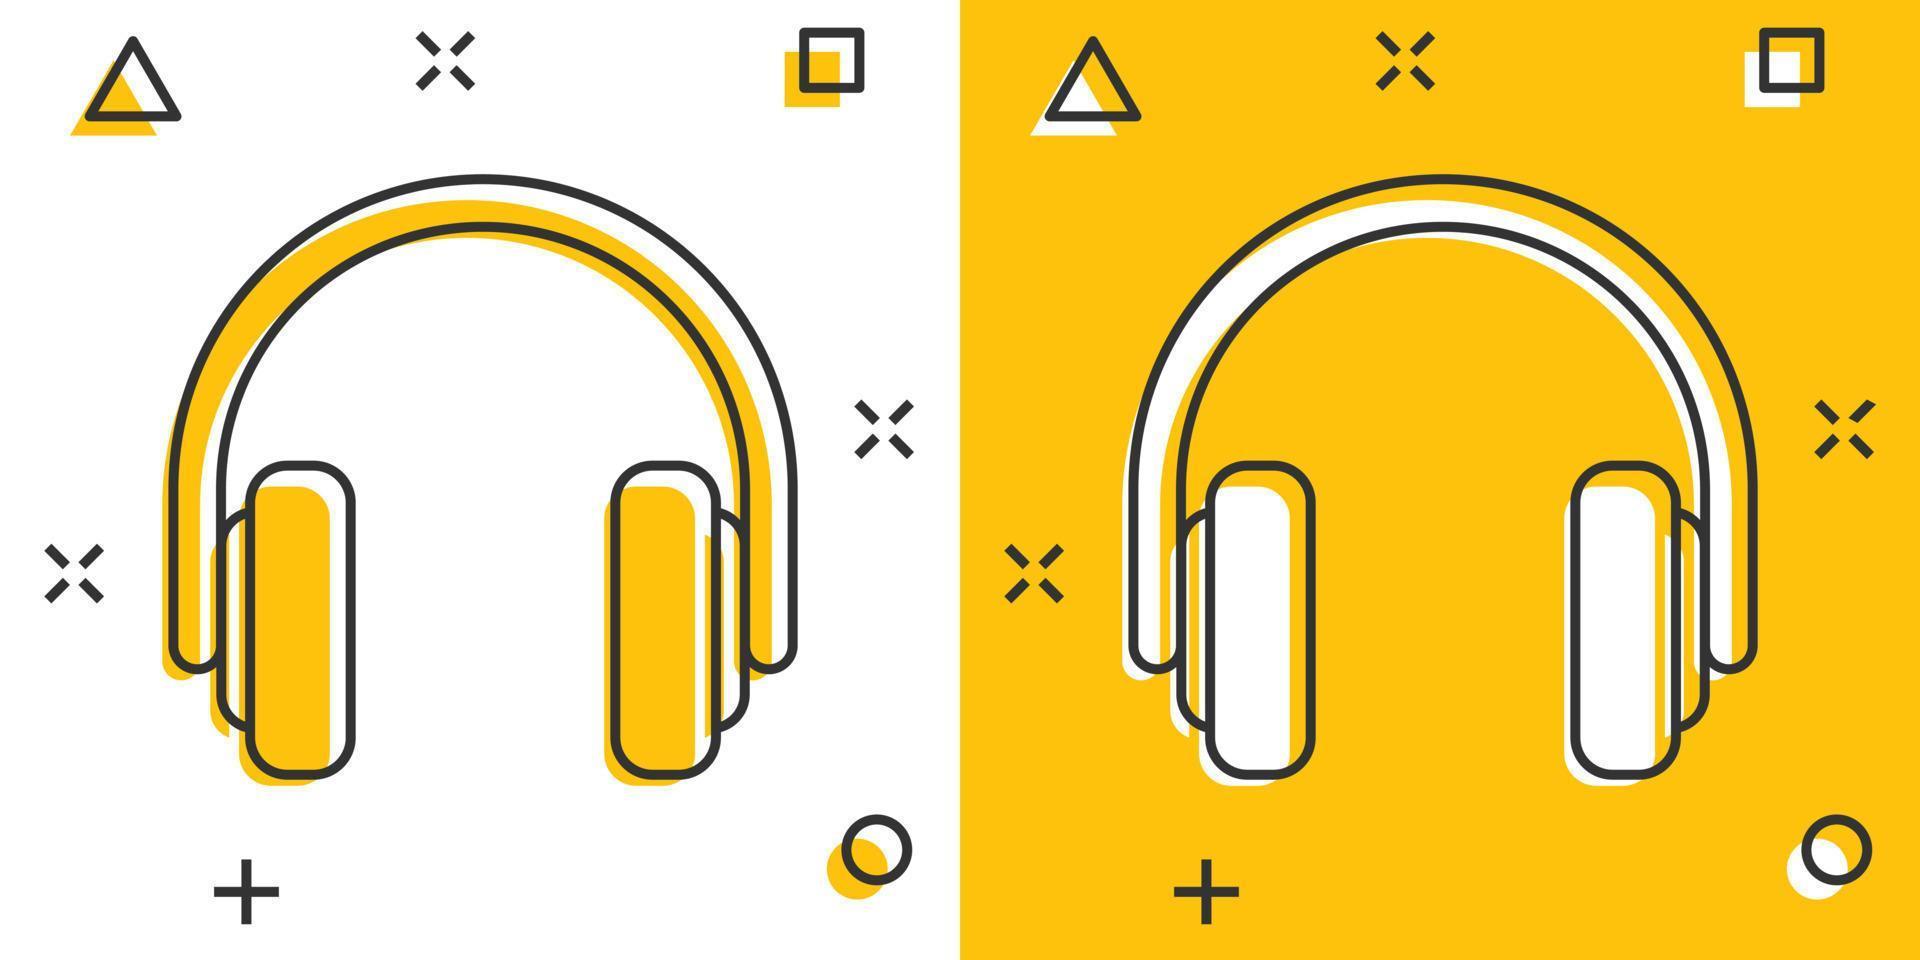 Kopfhörer-Headset-Symbol im Comic-Stil. Kopfhörer Vektor Cartoon Illustration Piktogramm. Audio-Gadget-Business-Konzept-Splash-Effekt.